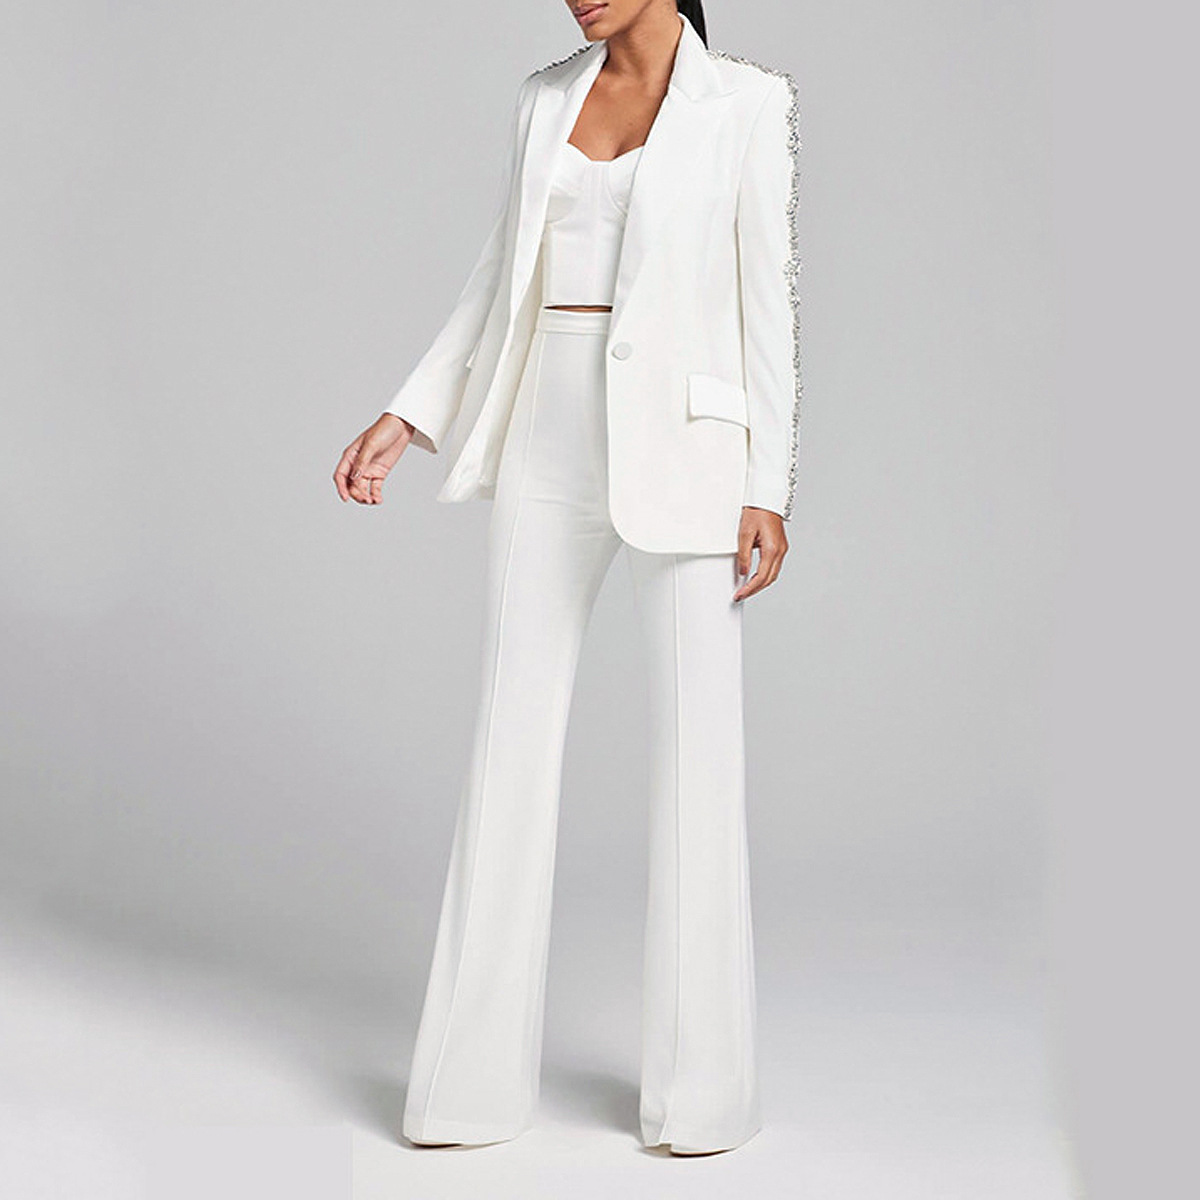 Luxury Rhinestone Office Lady Pant Suit